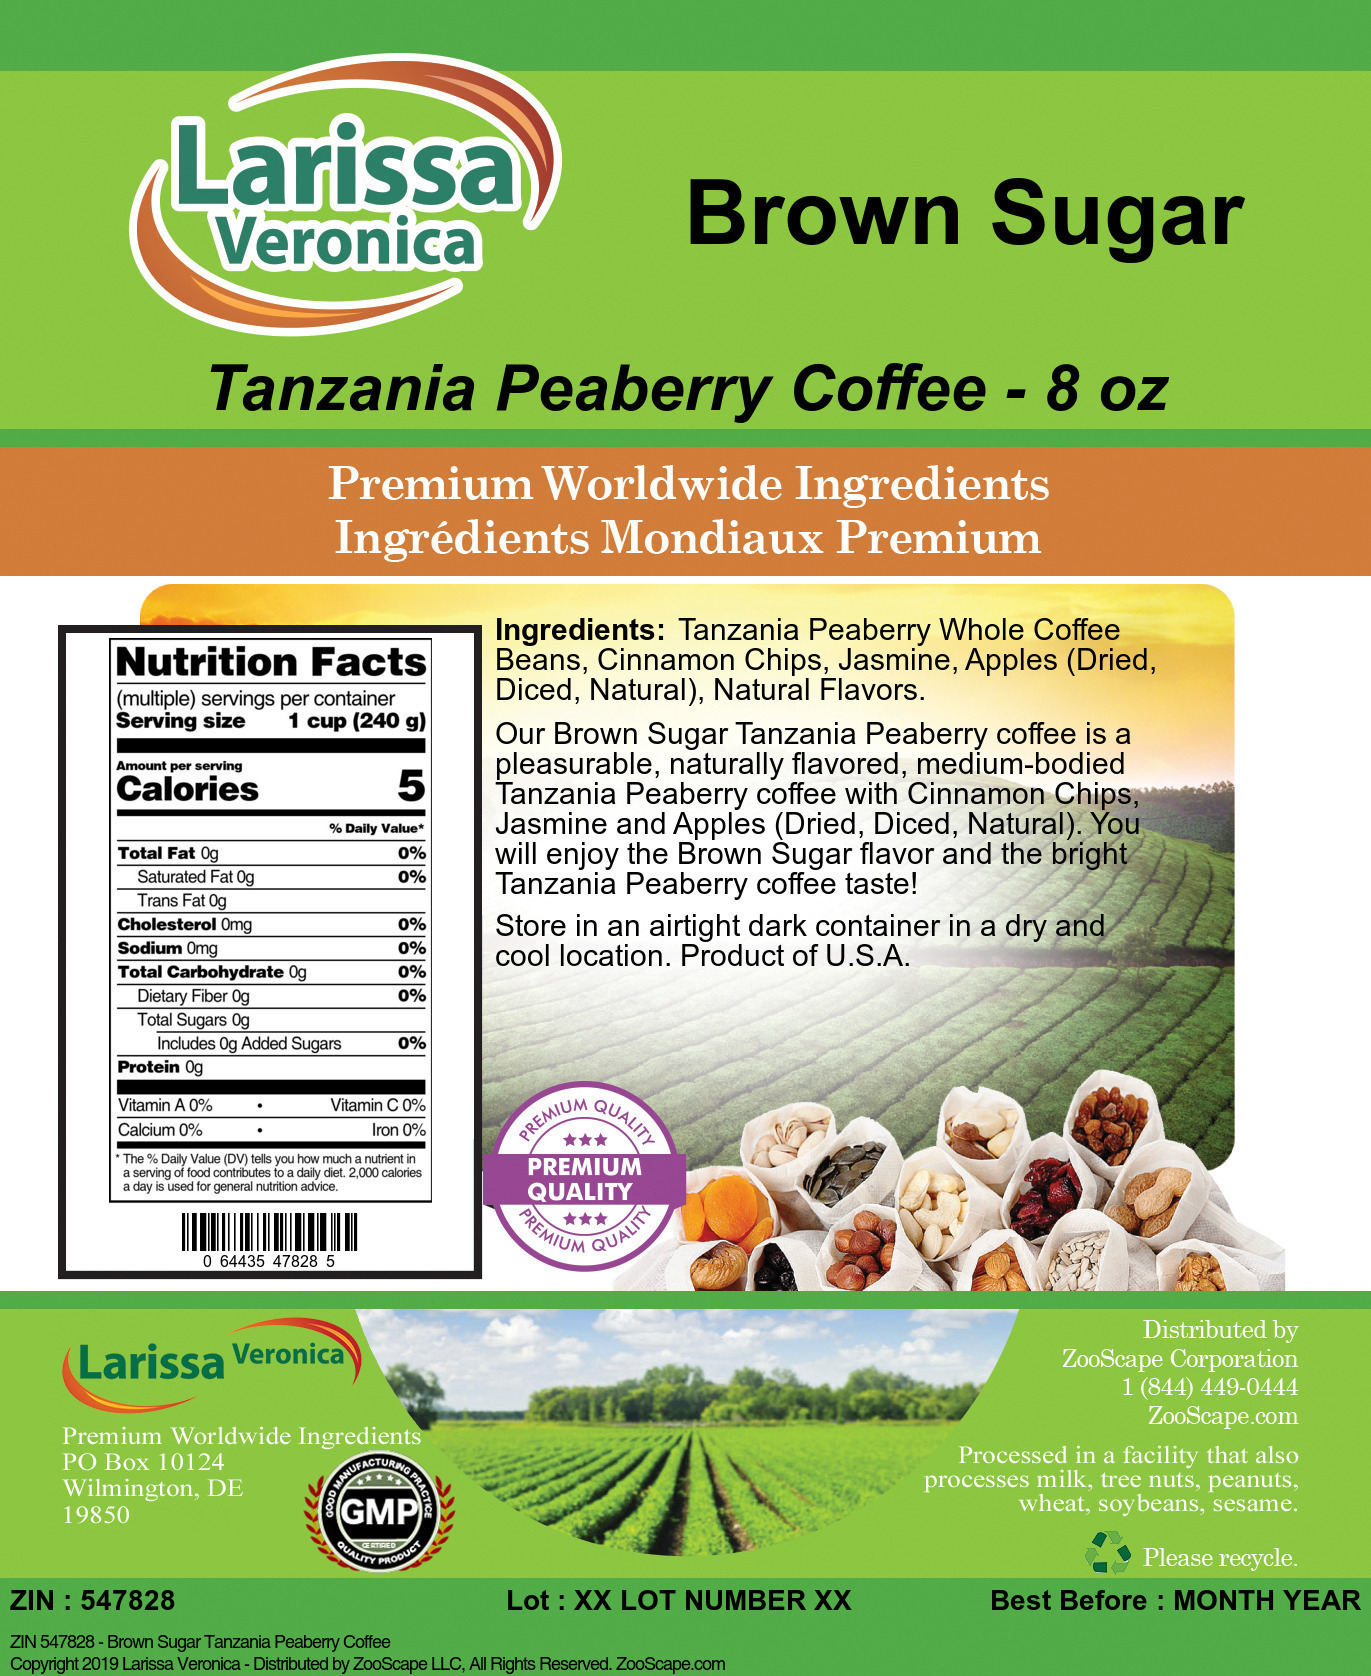 Brown Sugar Tanzania Peaberry Coffee - Label